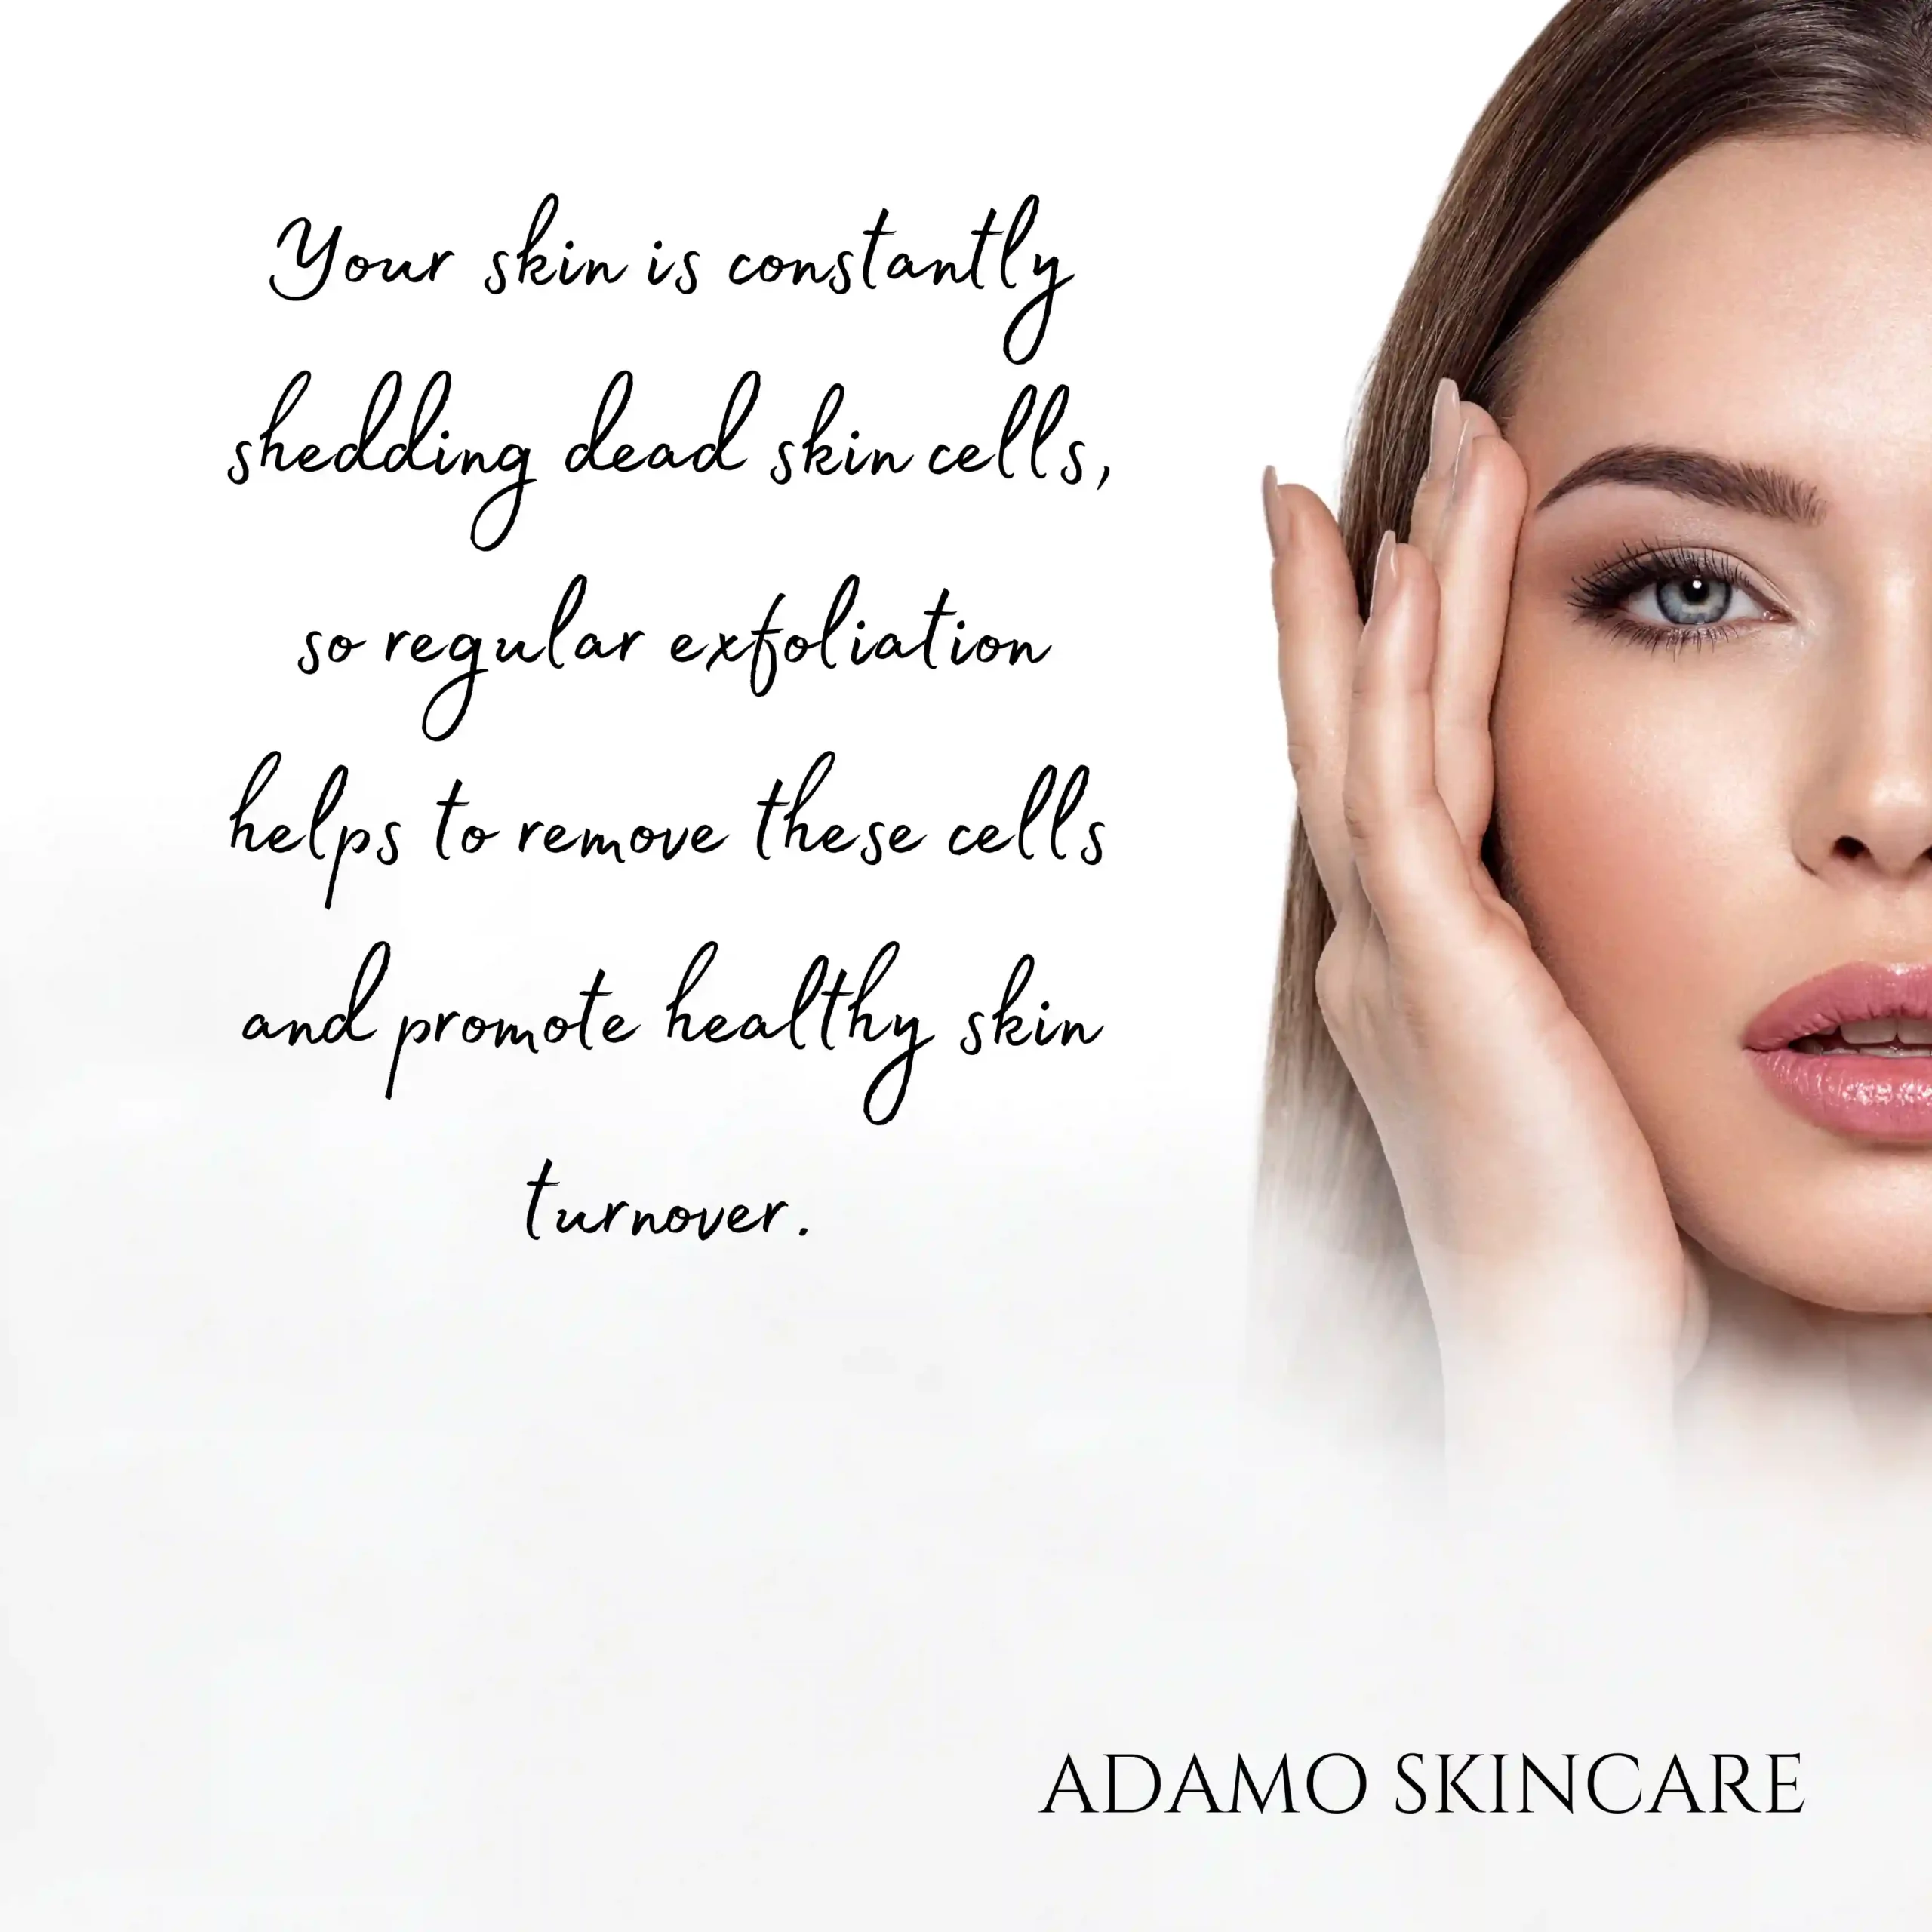 Skincare Tips from Adamo Skincare